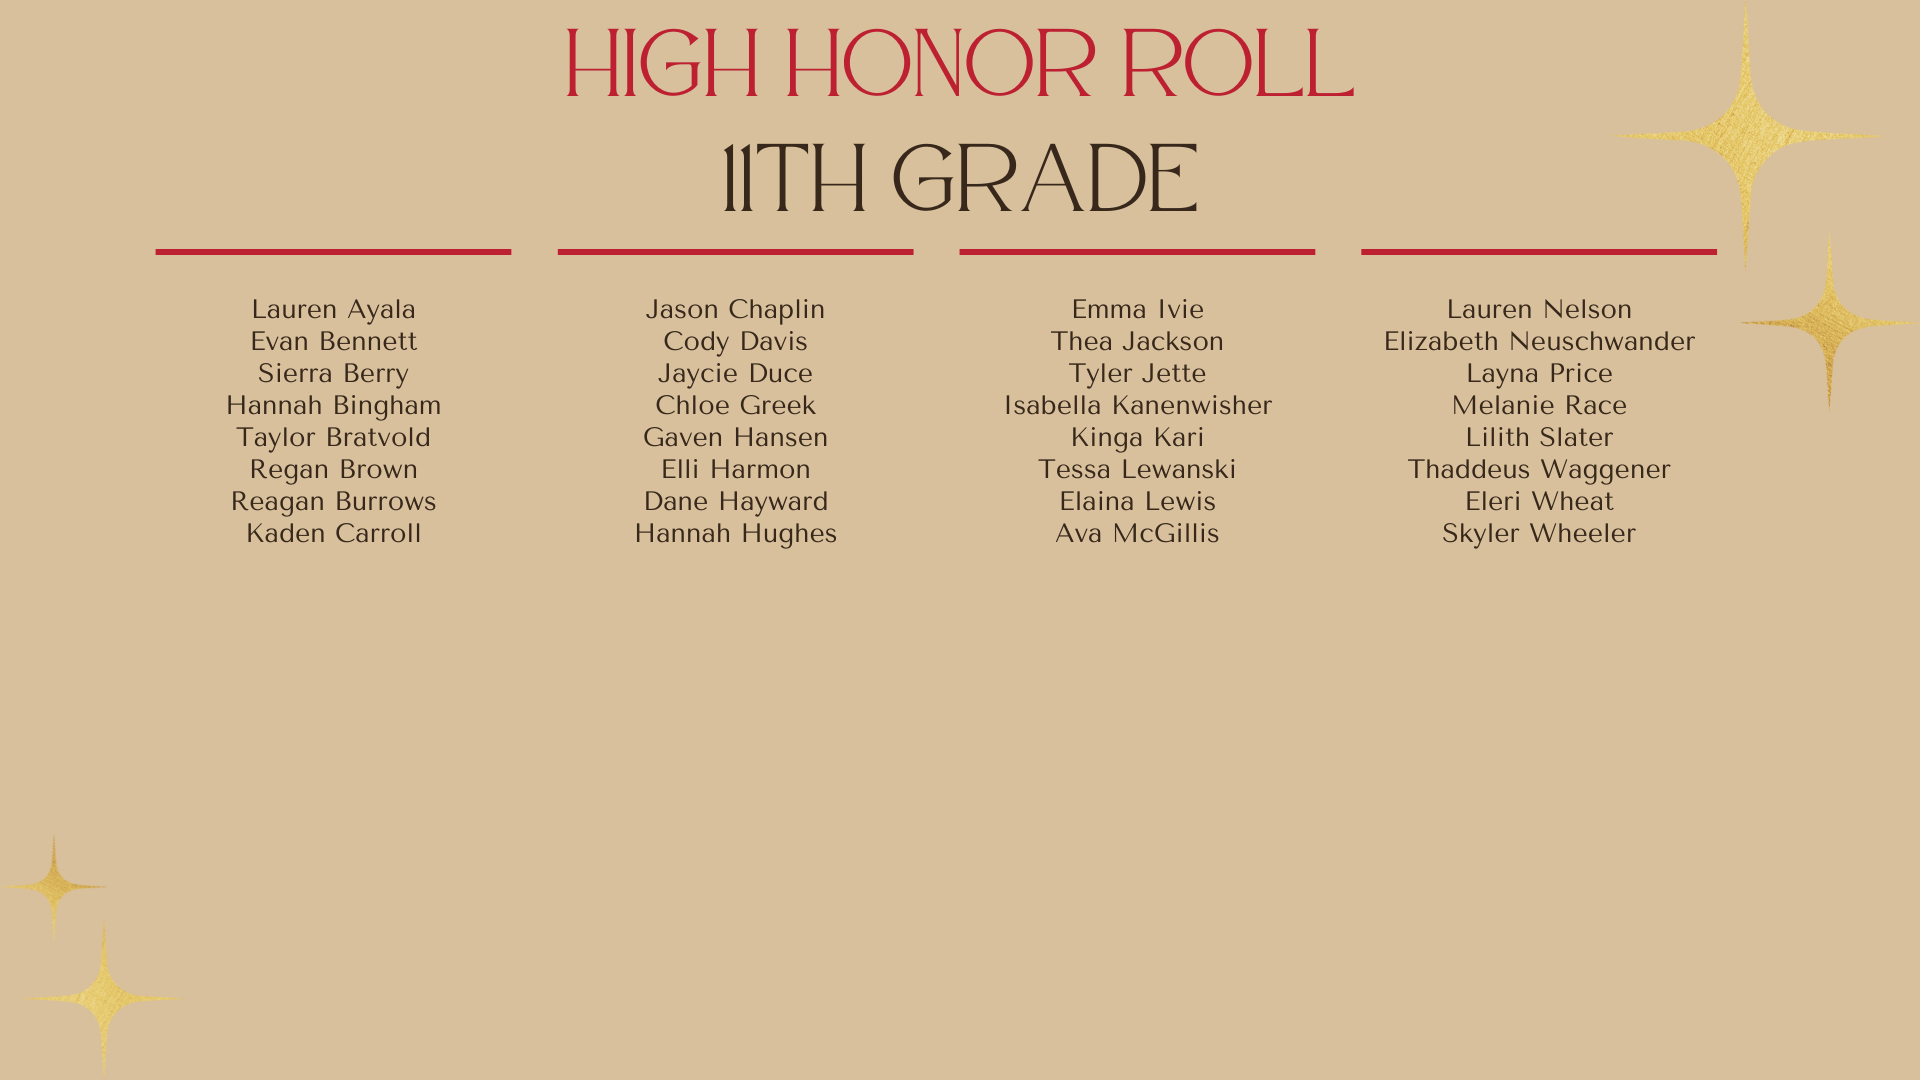 High Honor Roll 11th grade